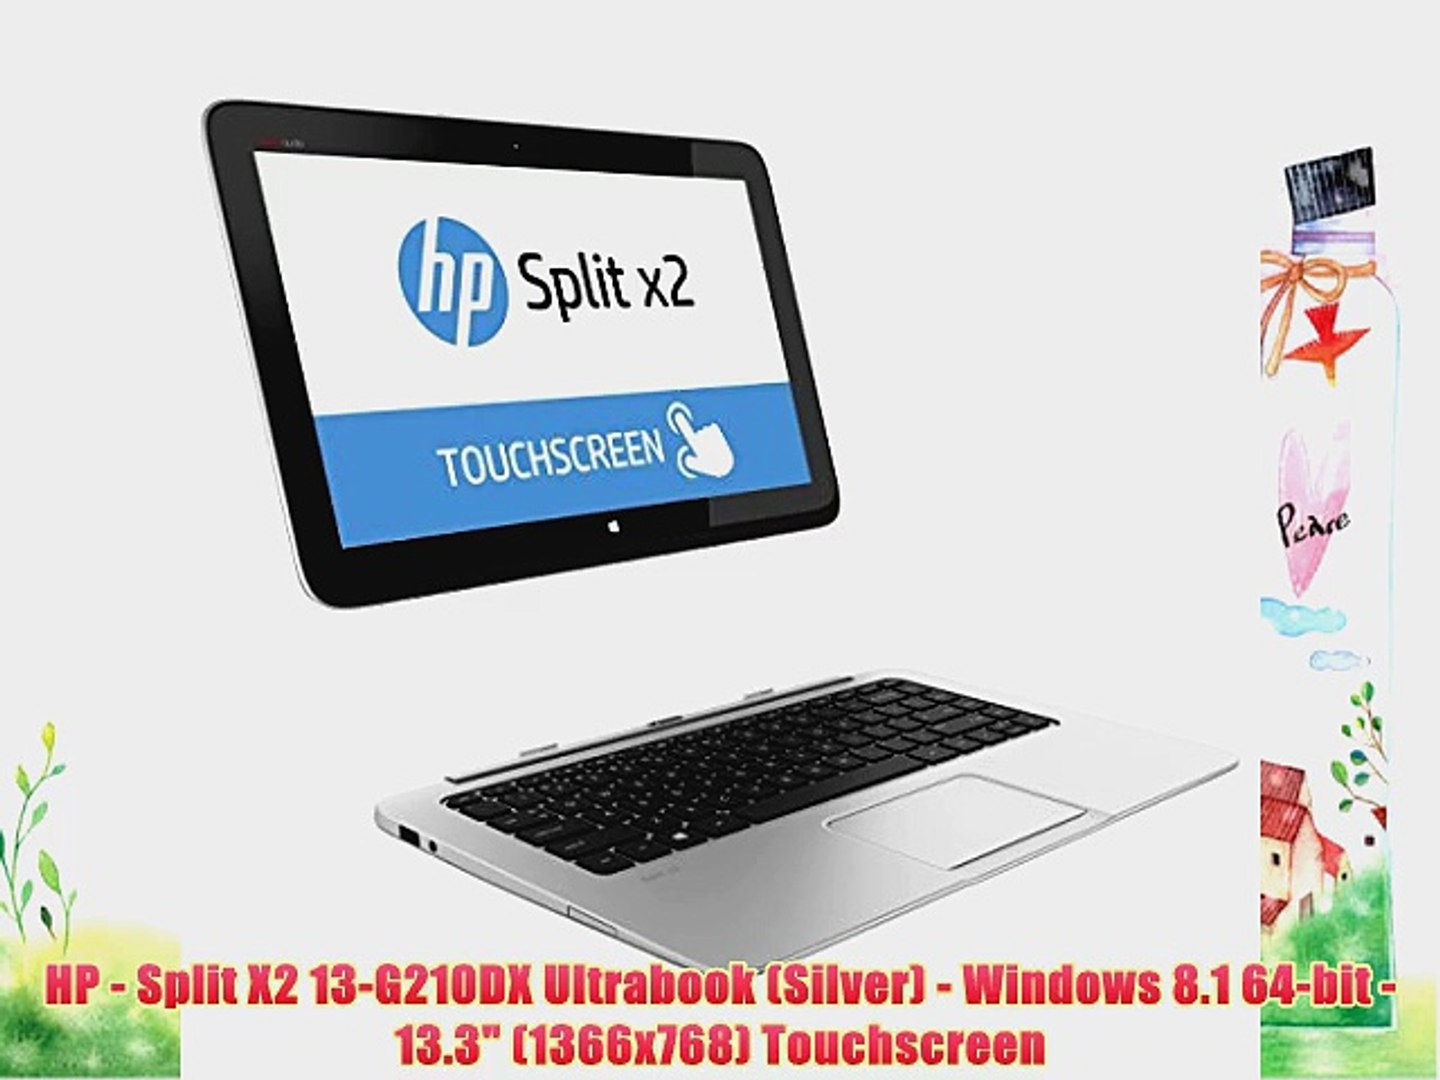 HP - Split X2 13-G210DX Ultrabook (Silver) - Intel Dual-Core i5-4202Y  1.60GHz - 4GB RAM - 128GB - video Dailymotion